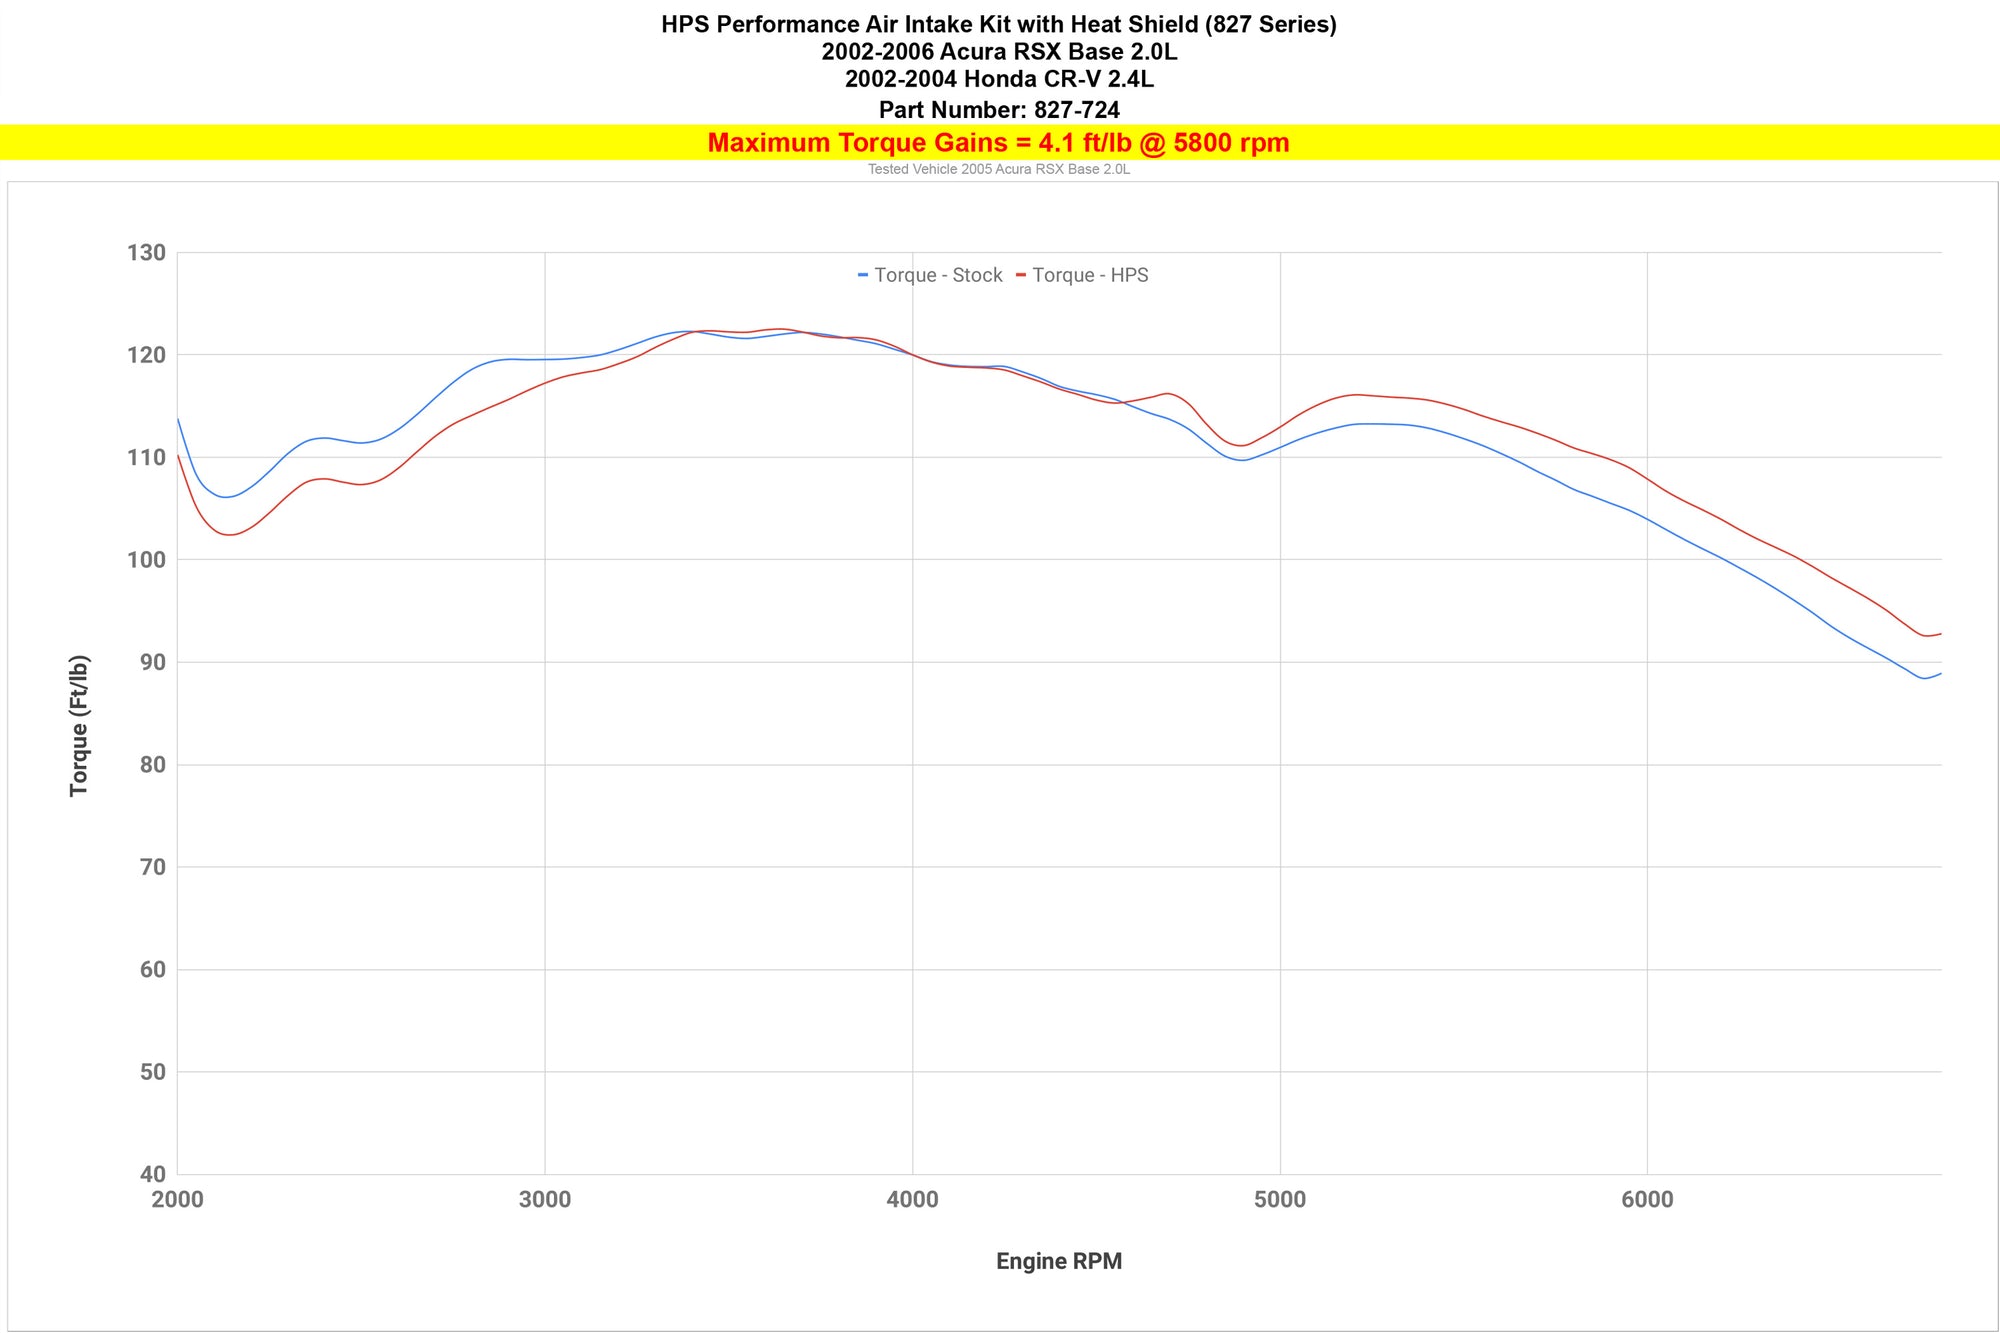 HPS Performance Air Intake Kit increase 4.1 ft/lb torque performance gains Acura 2002-2006 RSX Base 2.0L 827-724